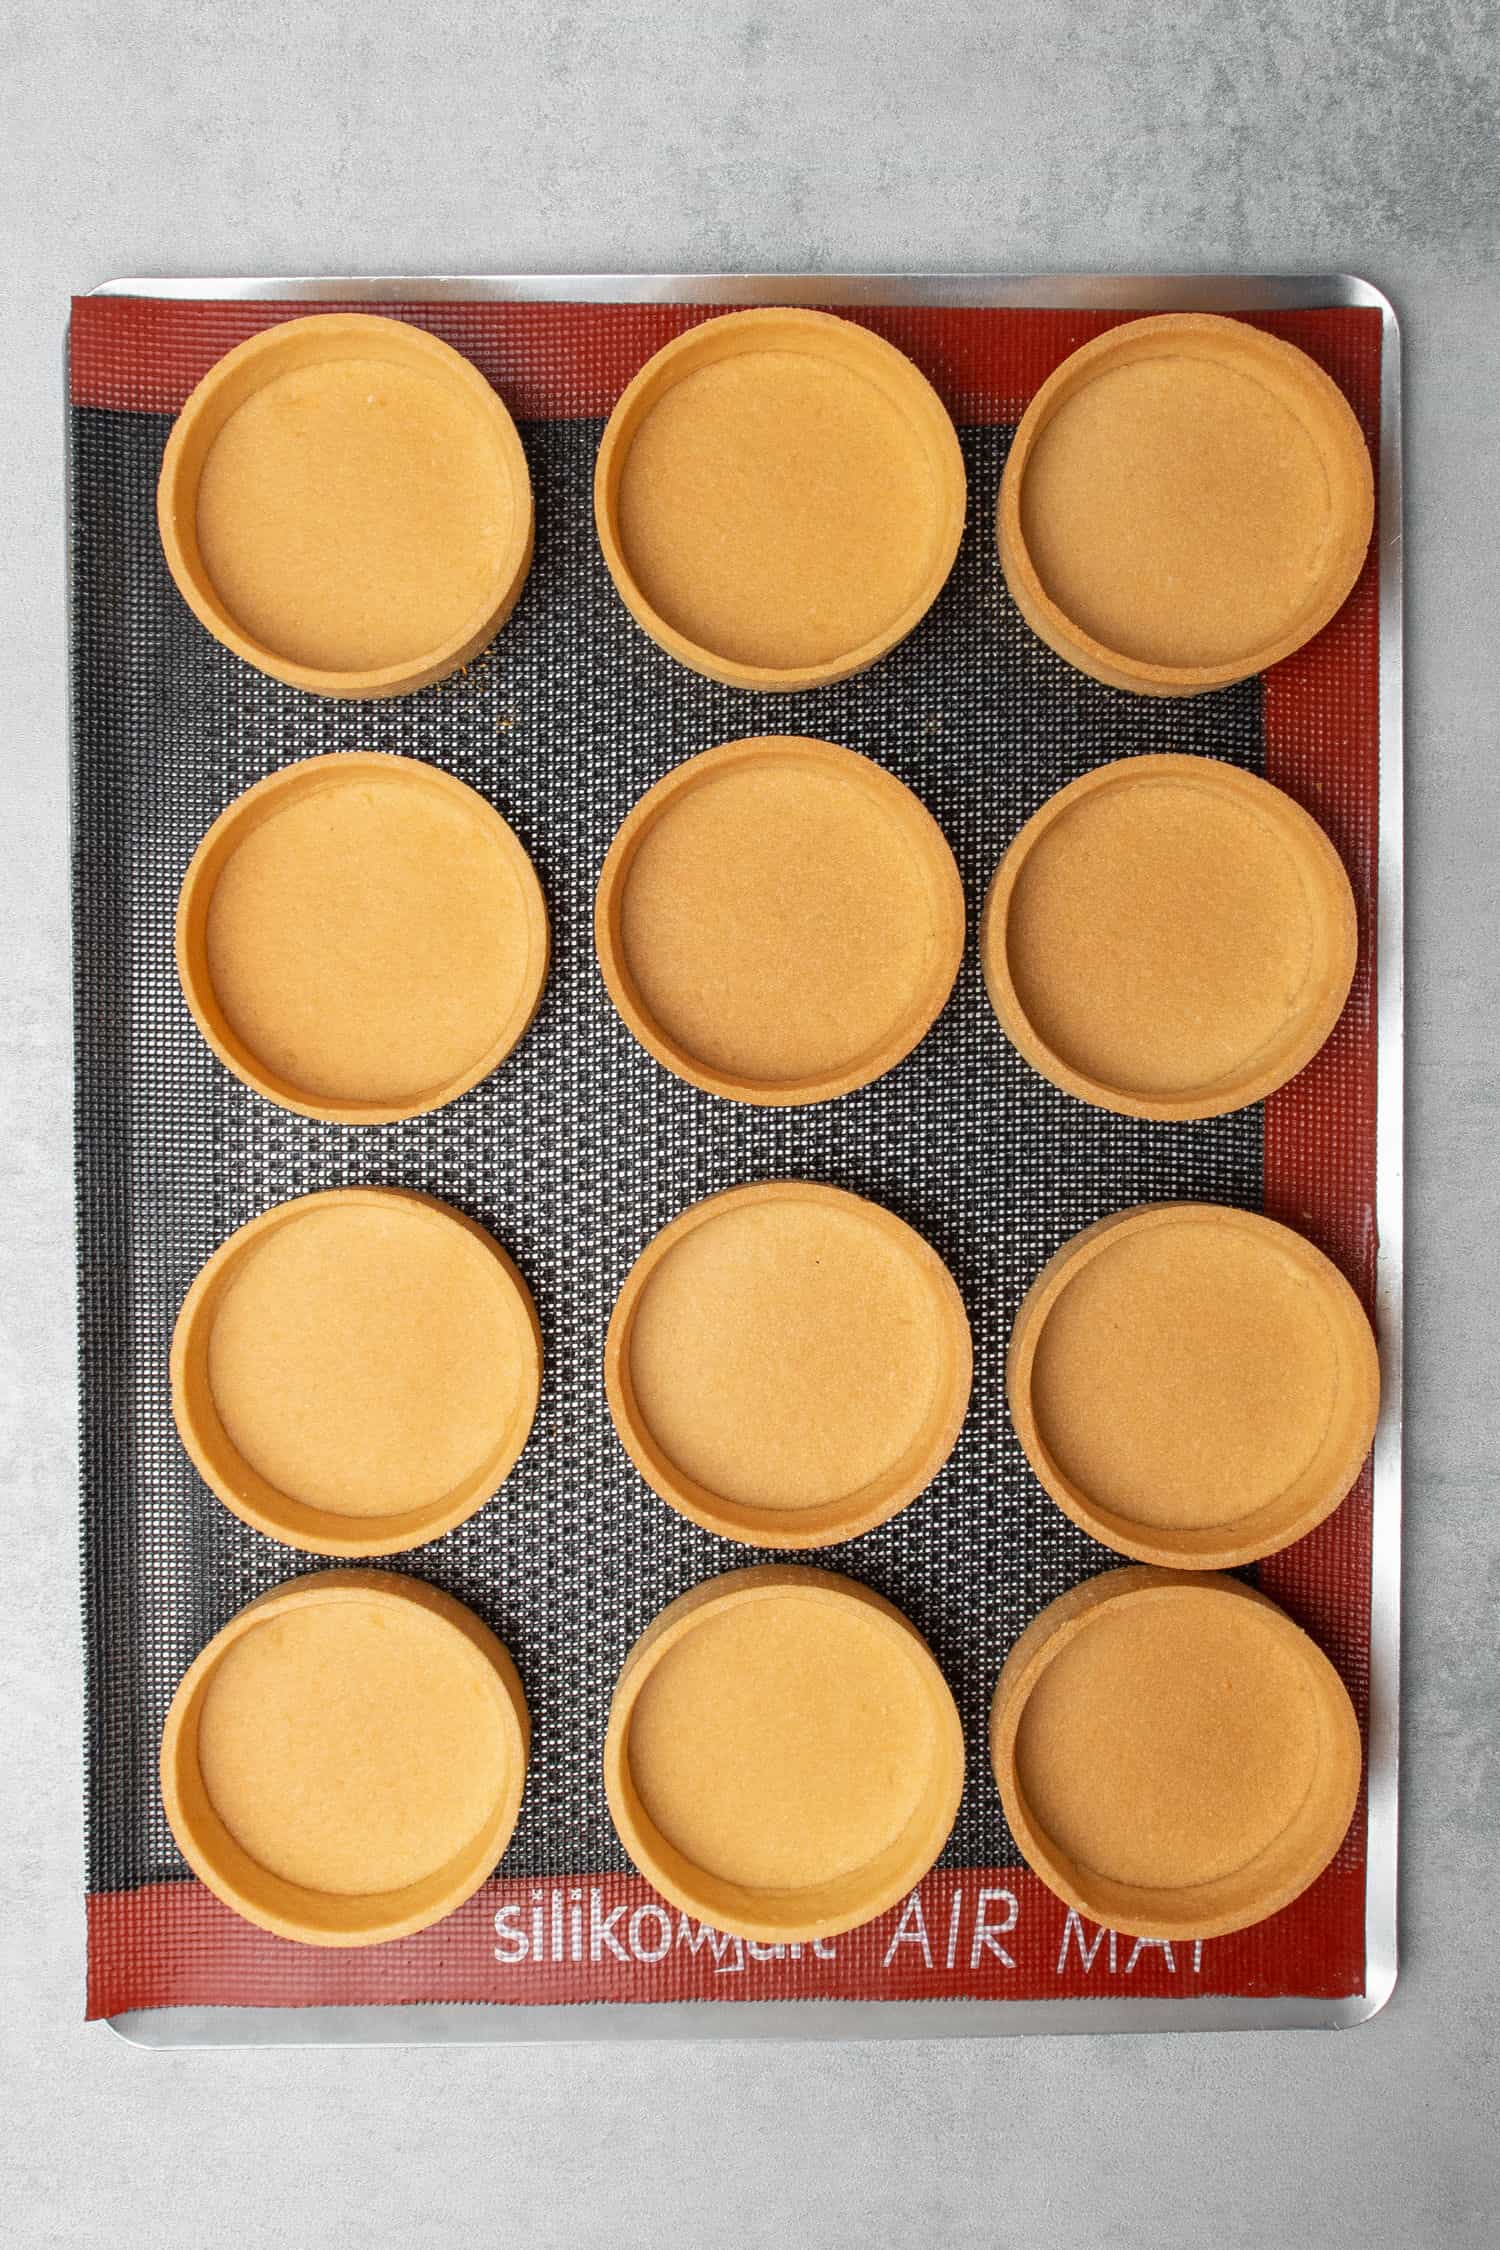 Pâte Sablée tart shells on a cooling rack.